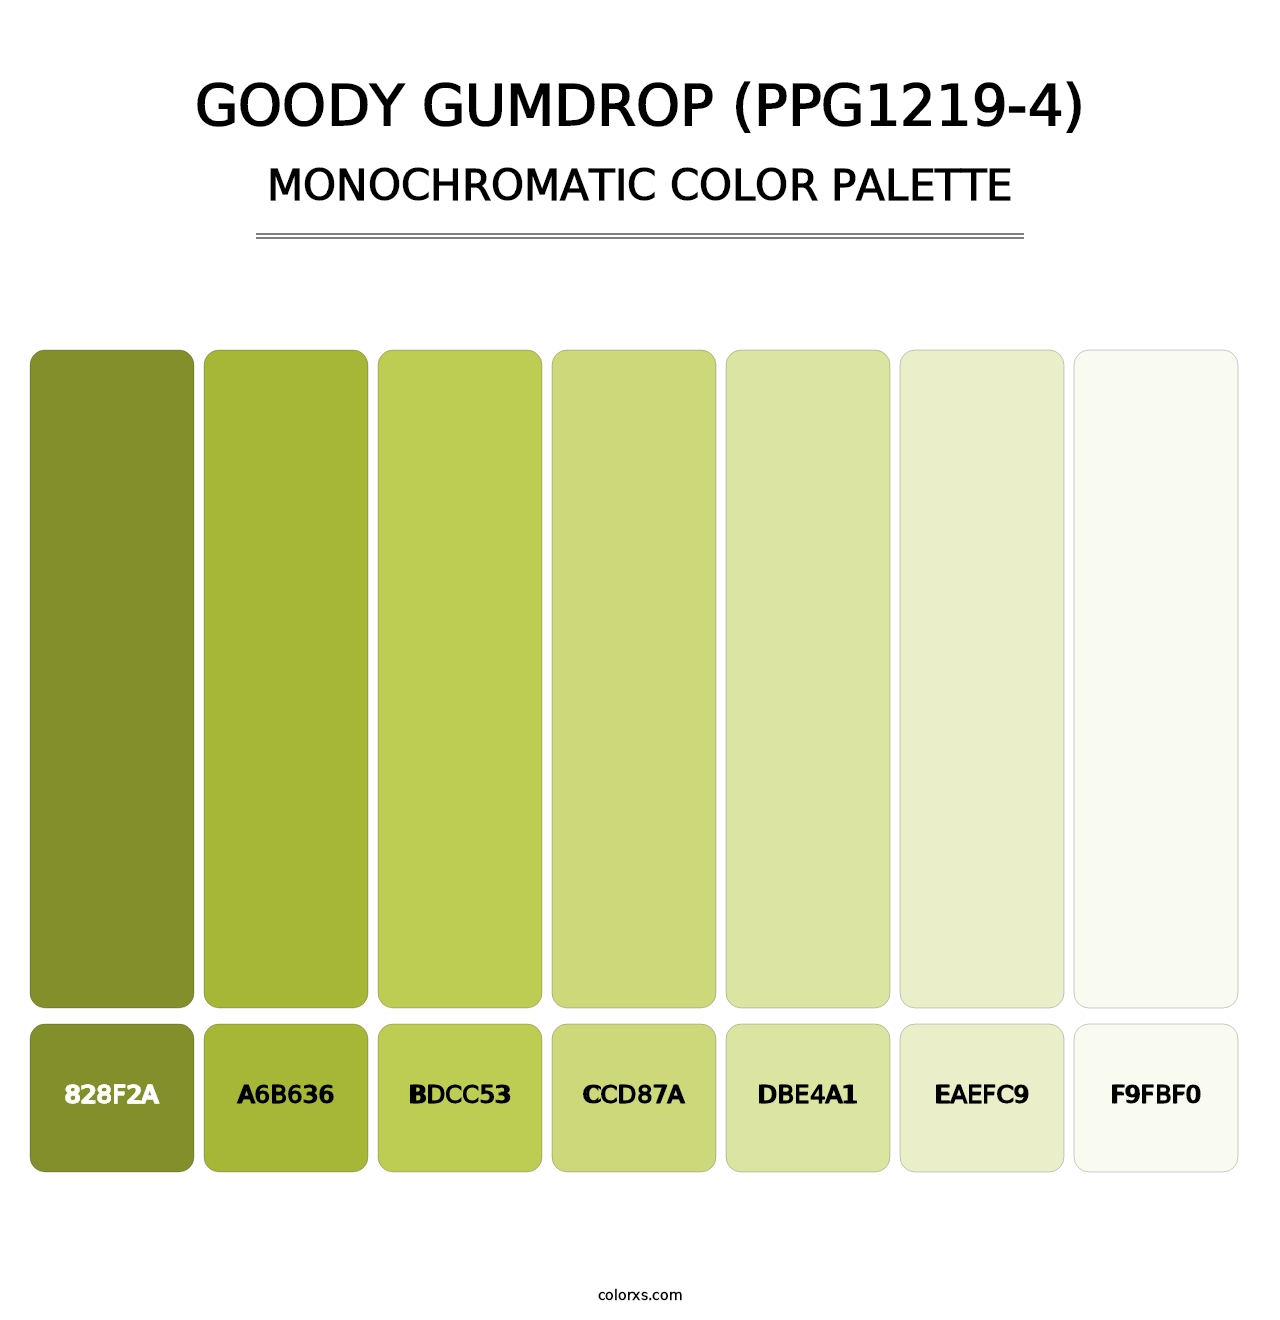 Goody Gumdrop (PPG1219-4) - Monochromatic Color Palette